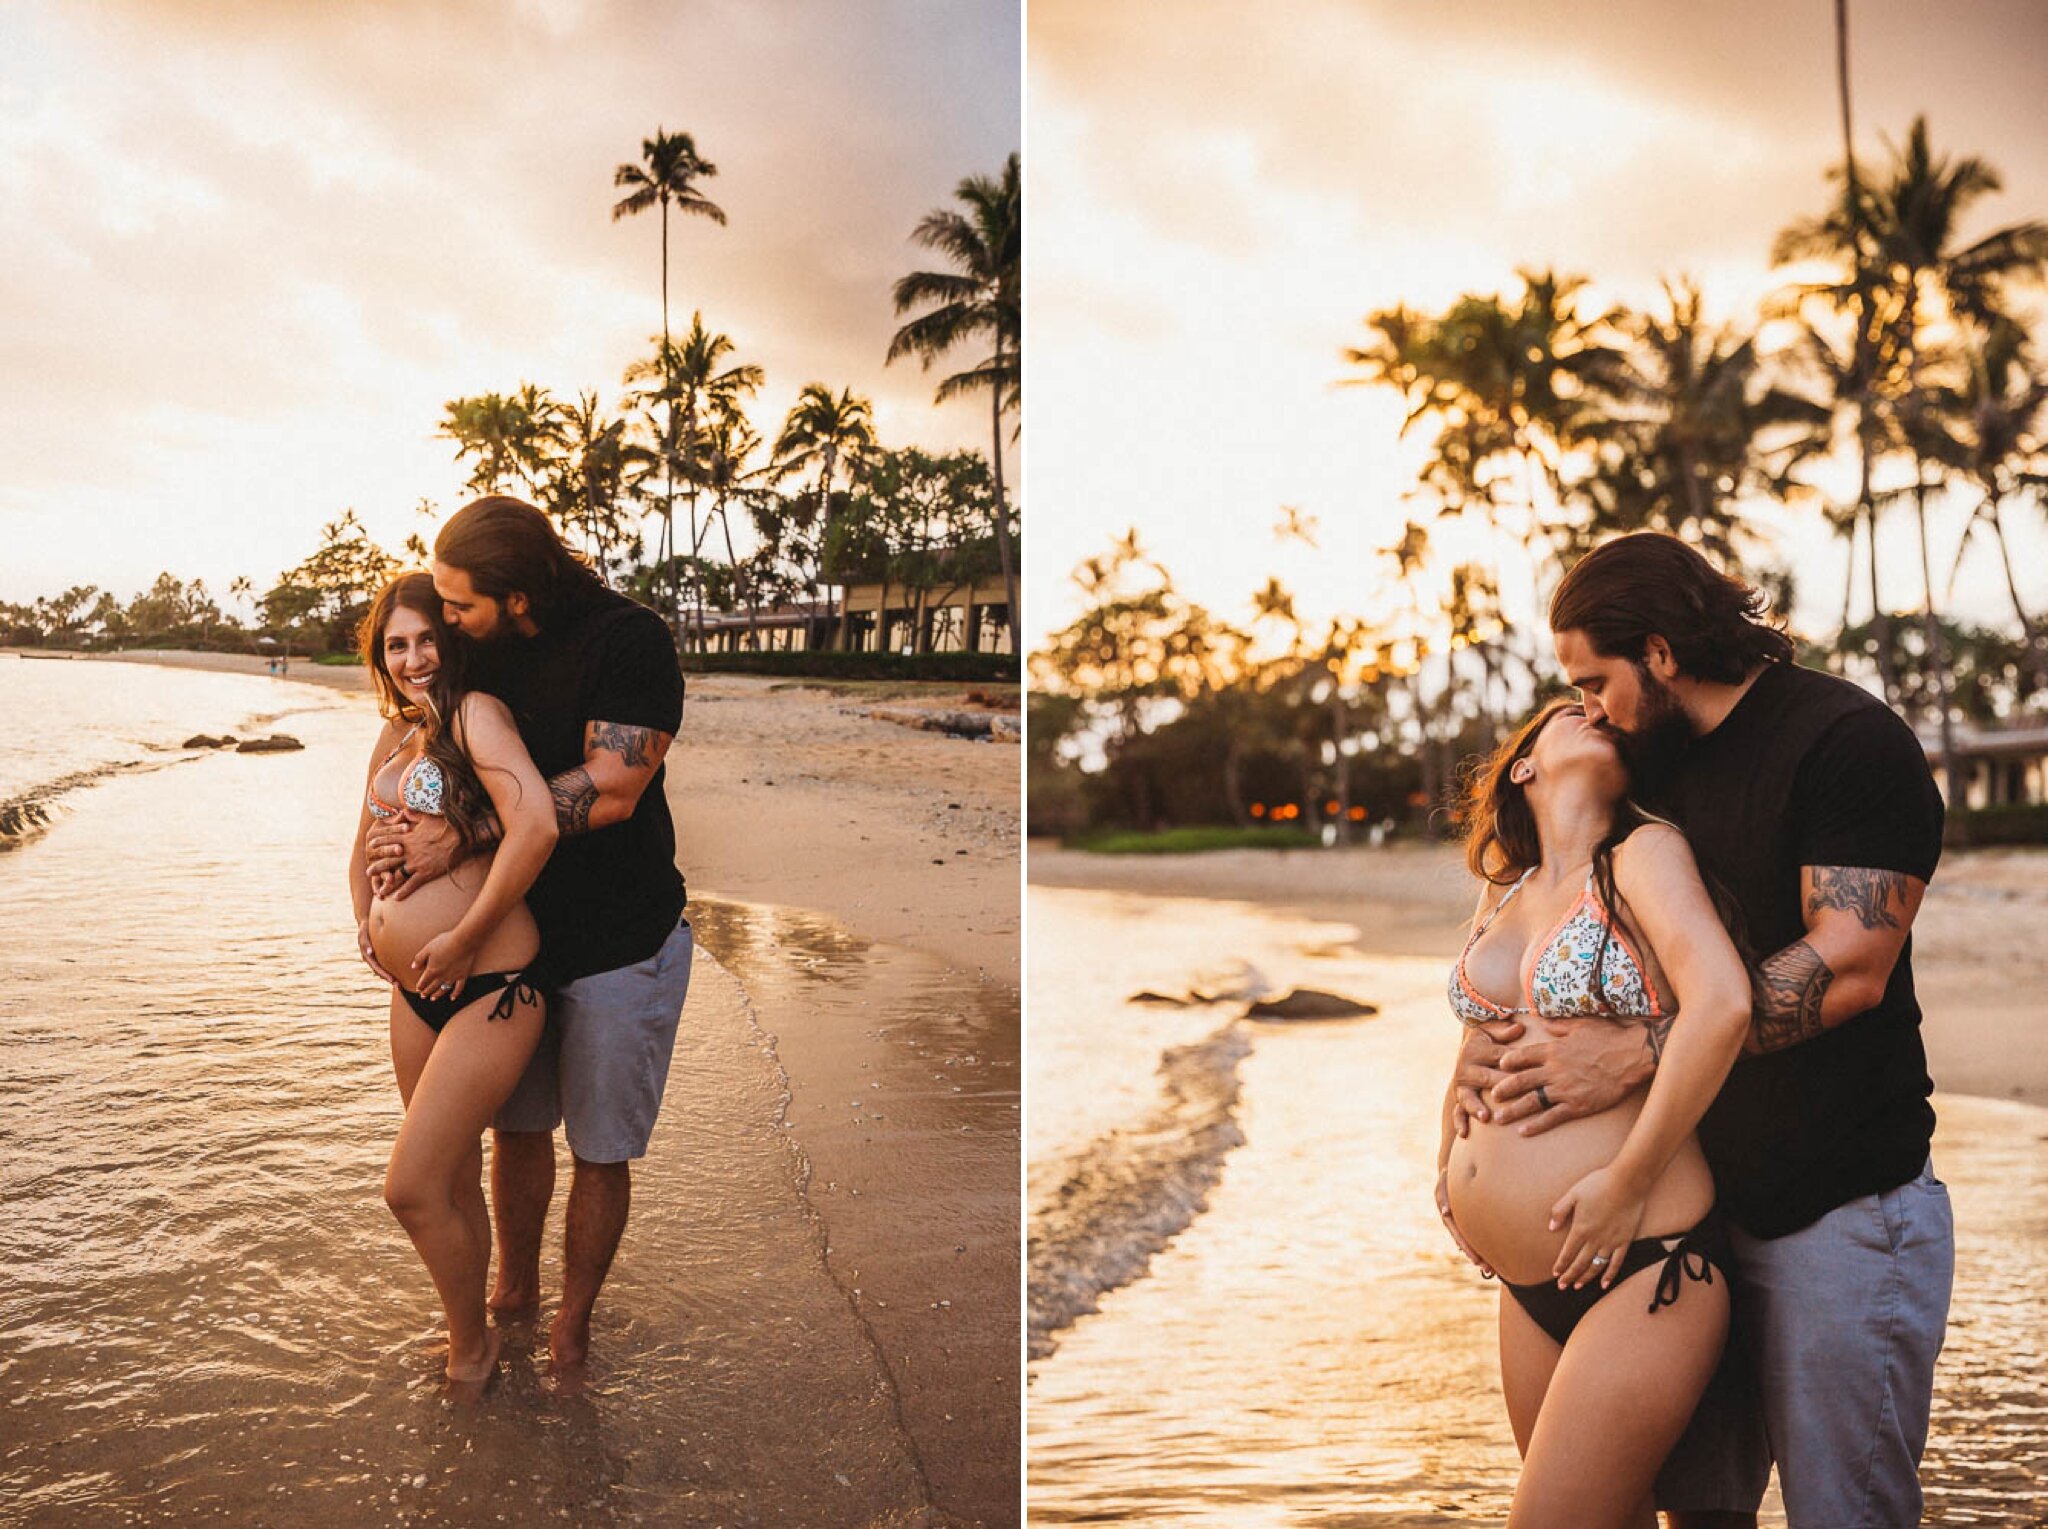 Sunset Maternity Photography Session at Kahala Beach in Oahu - Hawaii Family Photographer - Johanna Dye 13.jpg